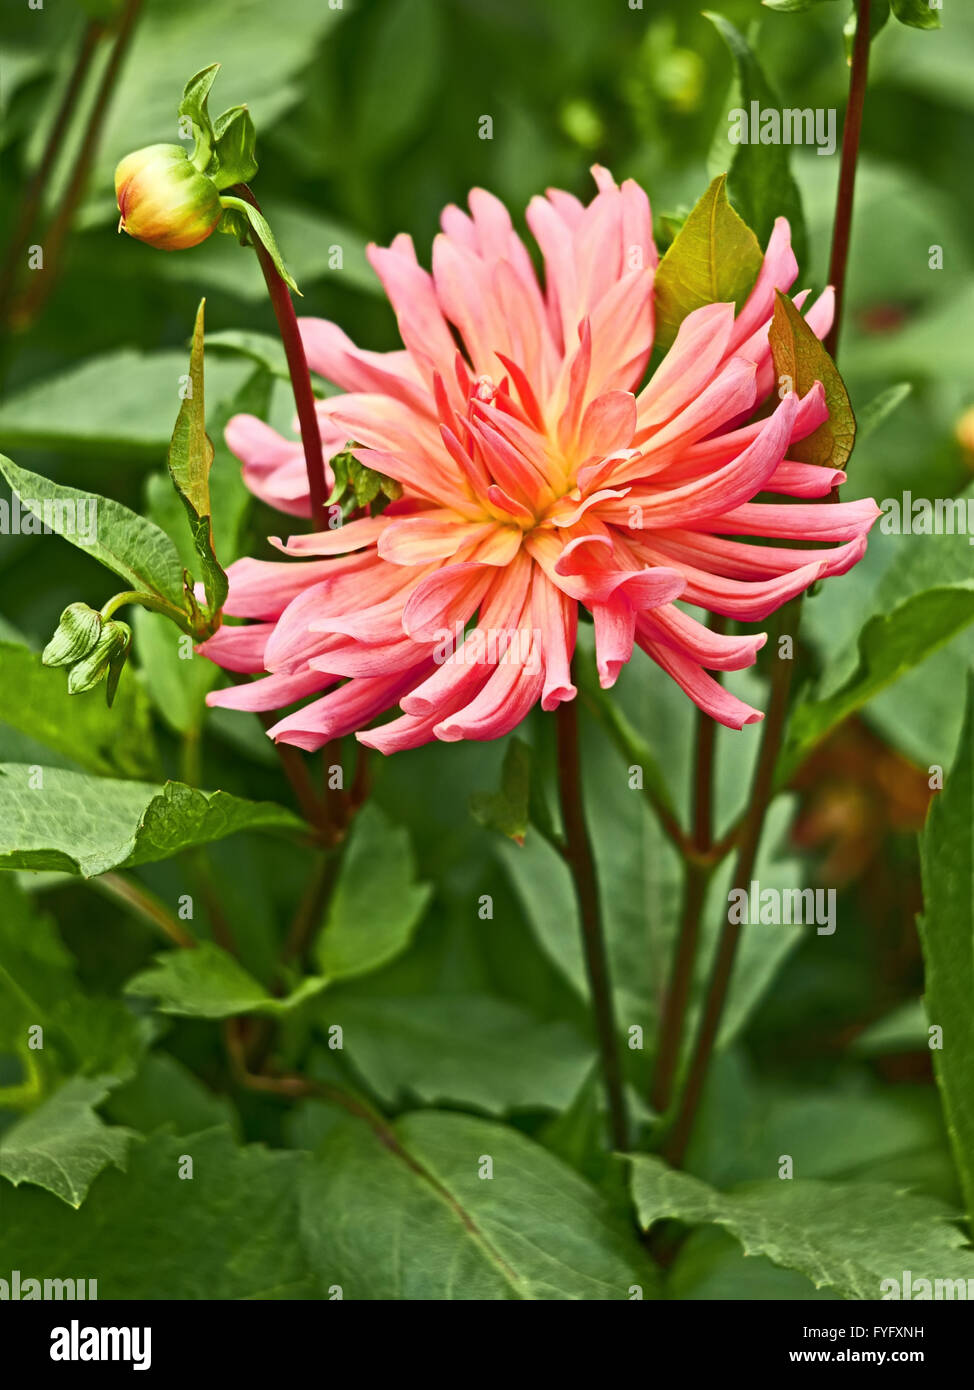 Rosa Dahlie im Blumenbeet Stockfoto